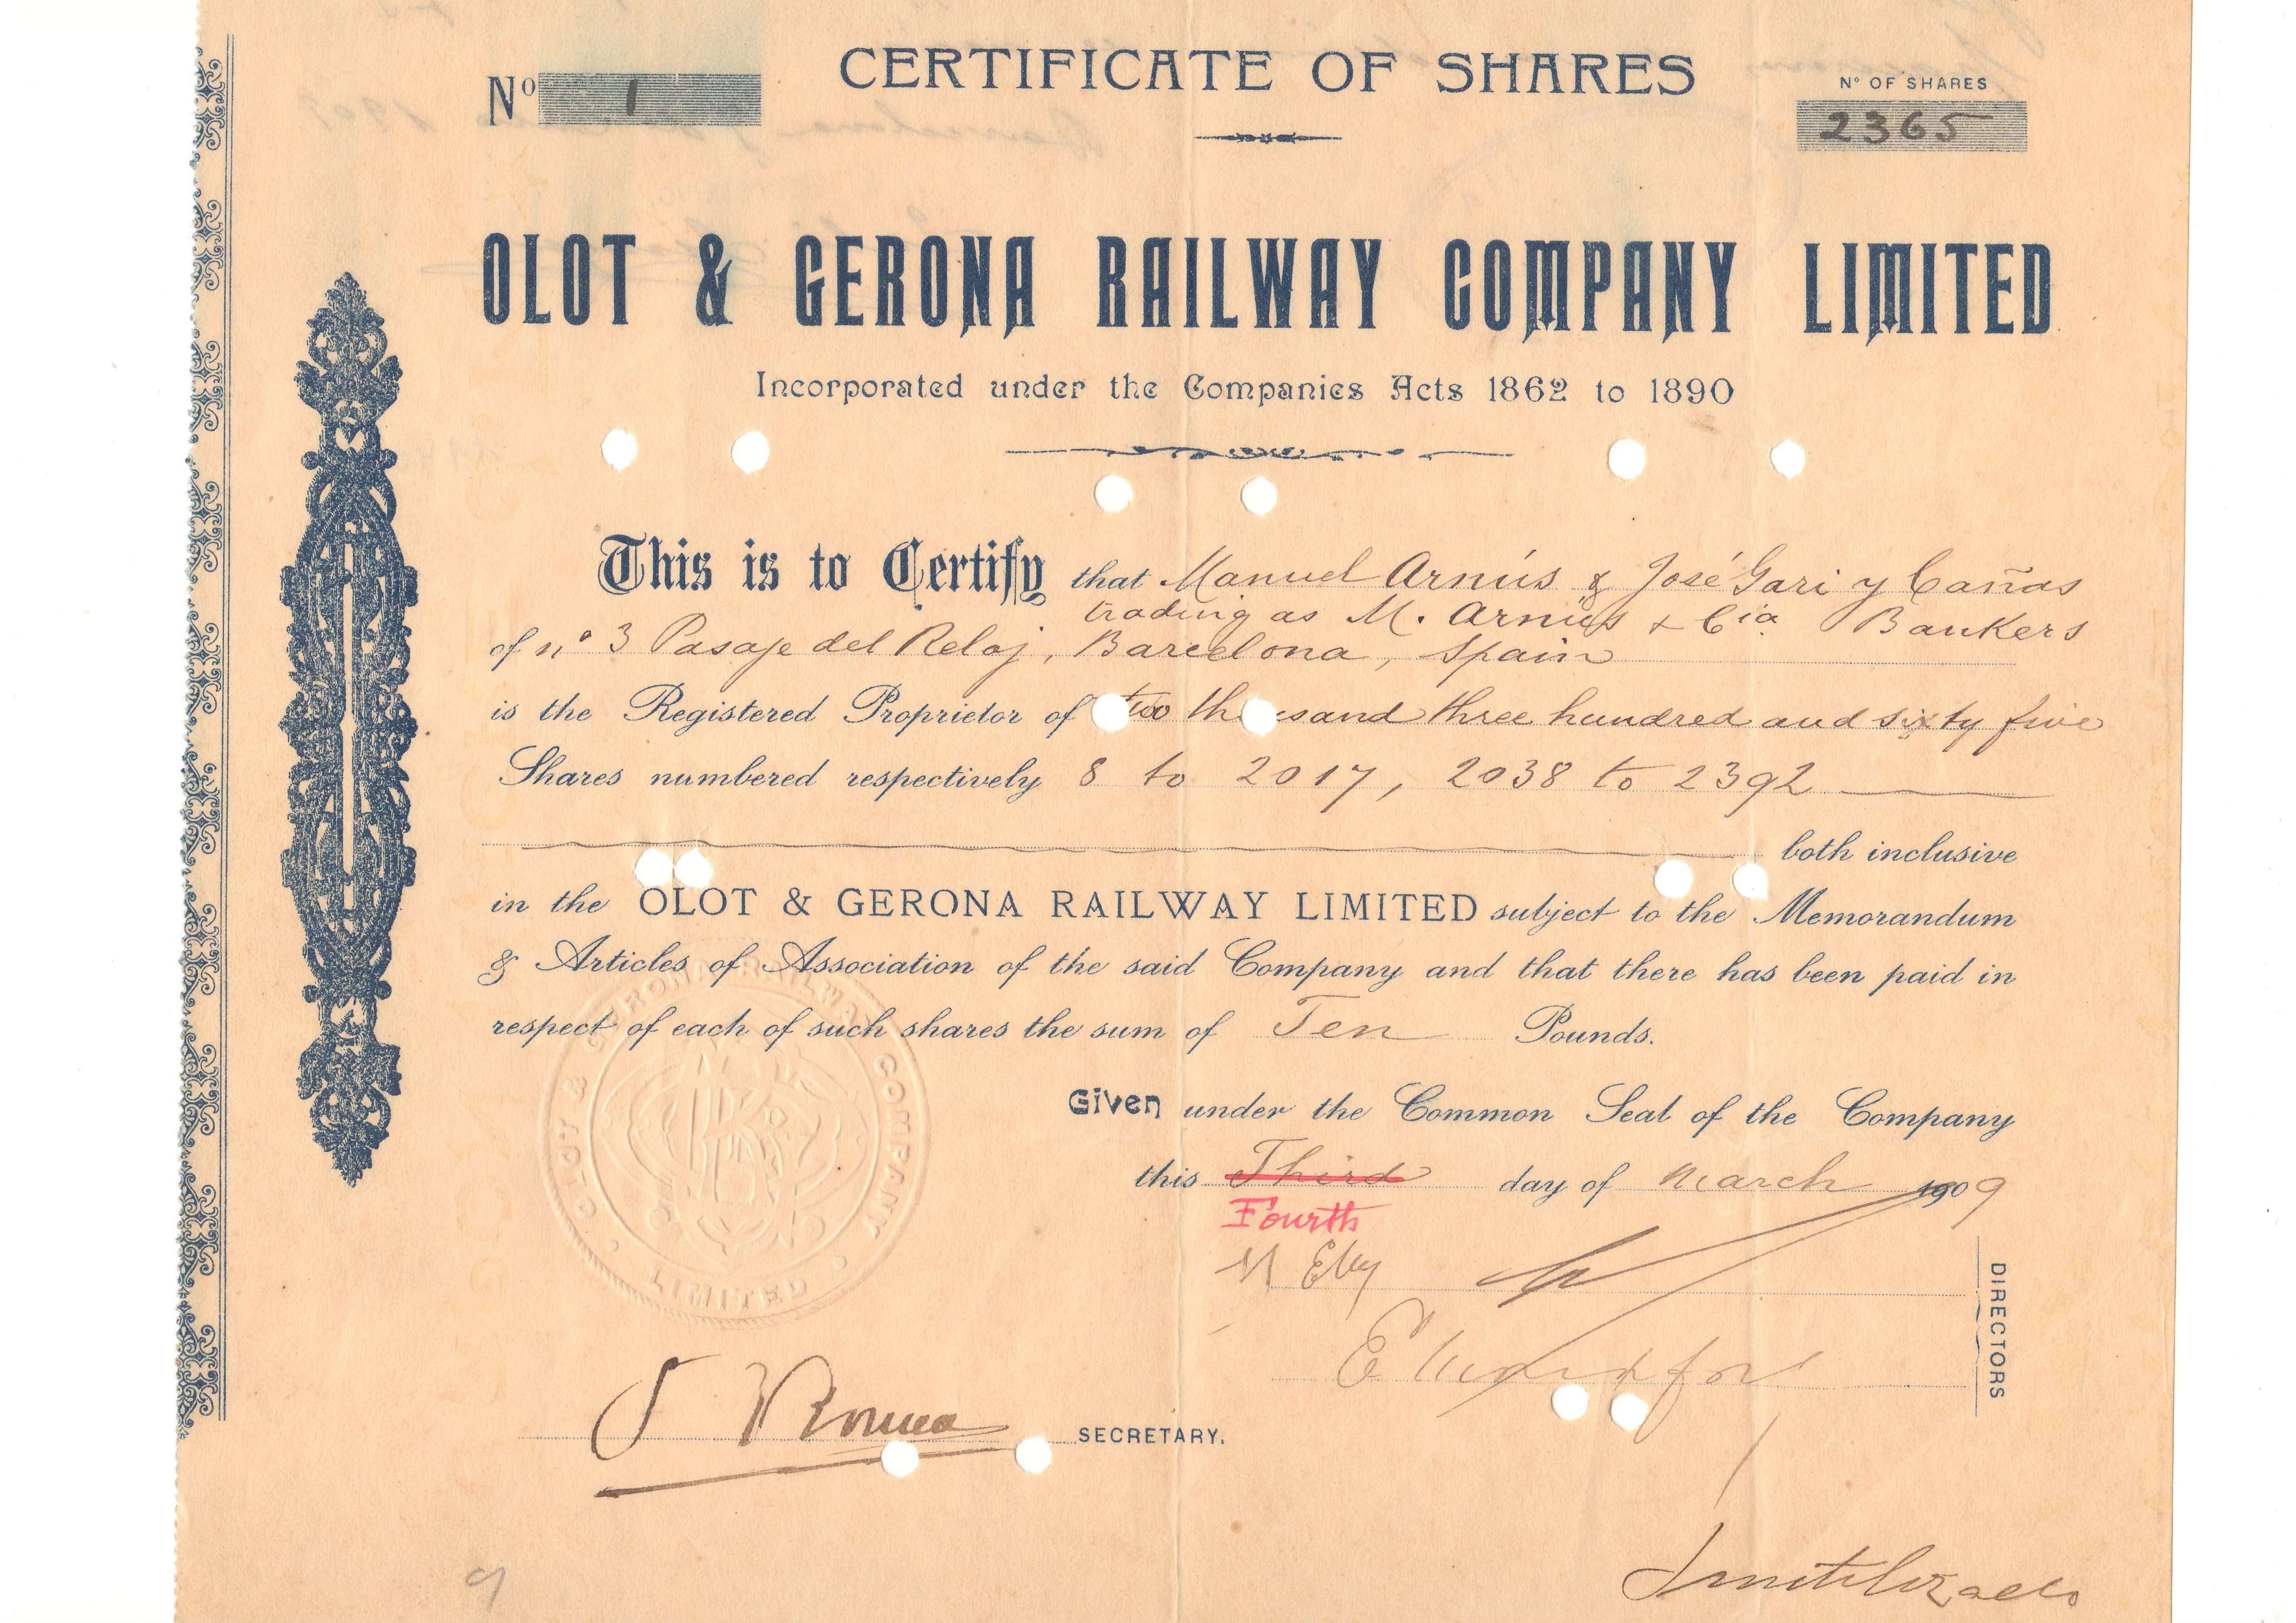 The Olot and Gerona Railway Company Limited